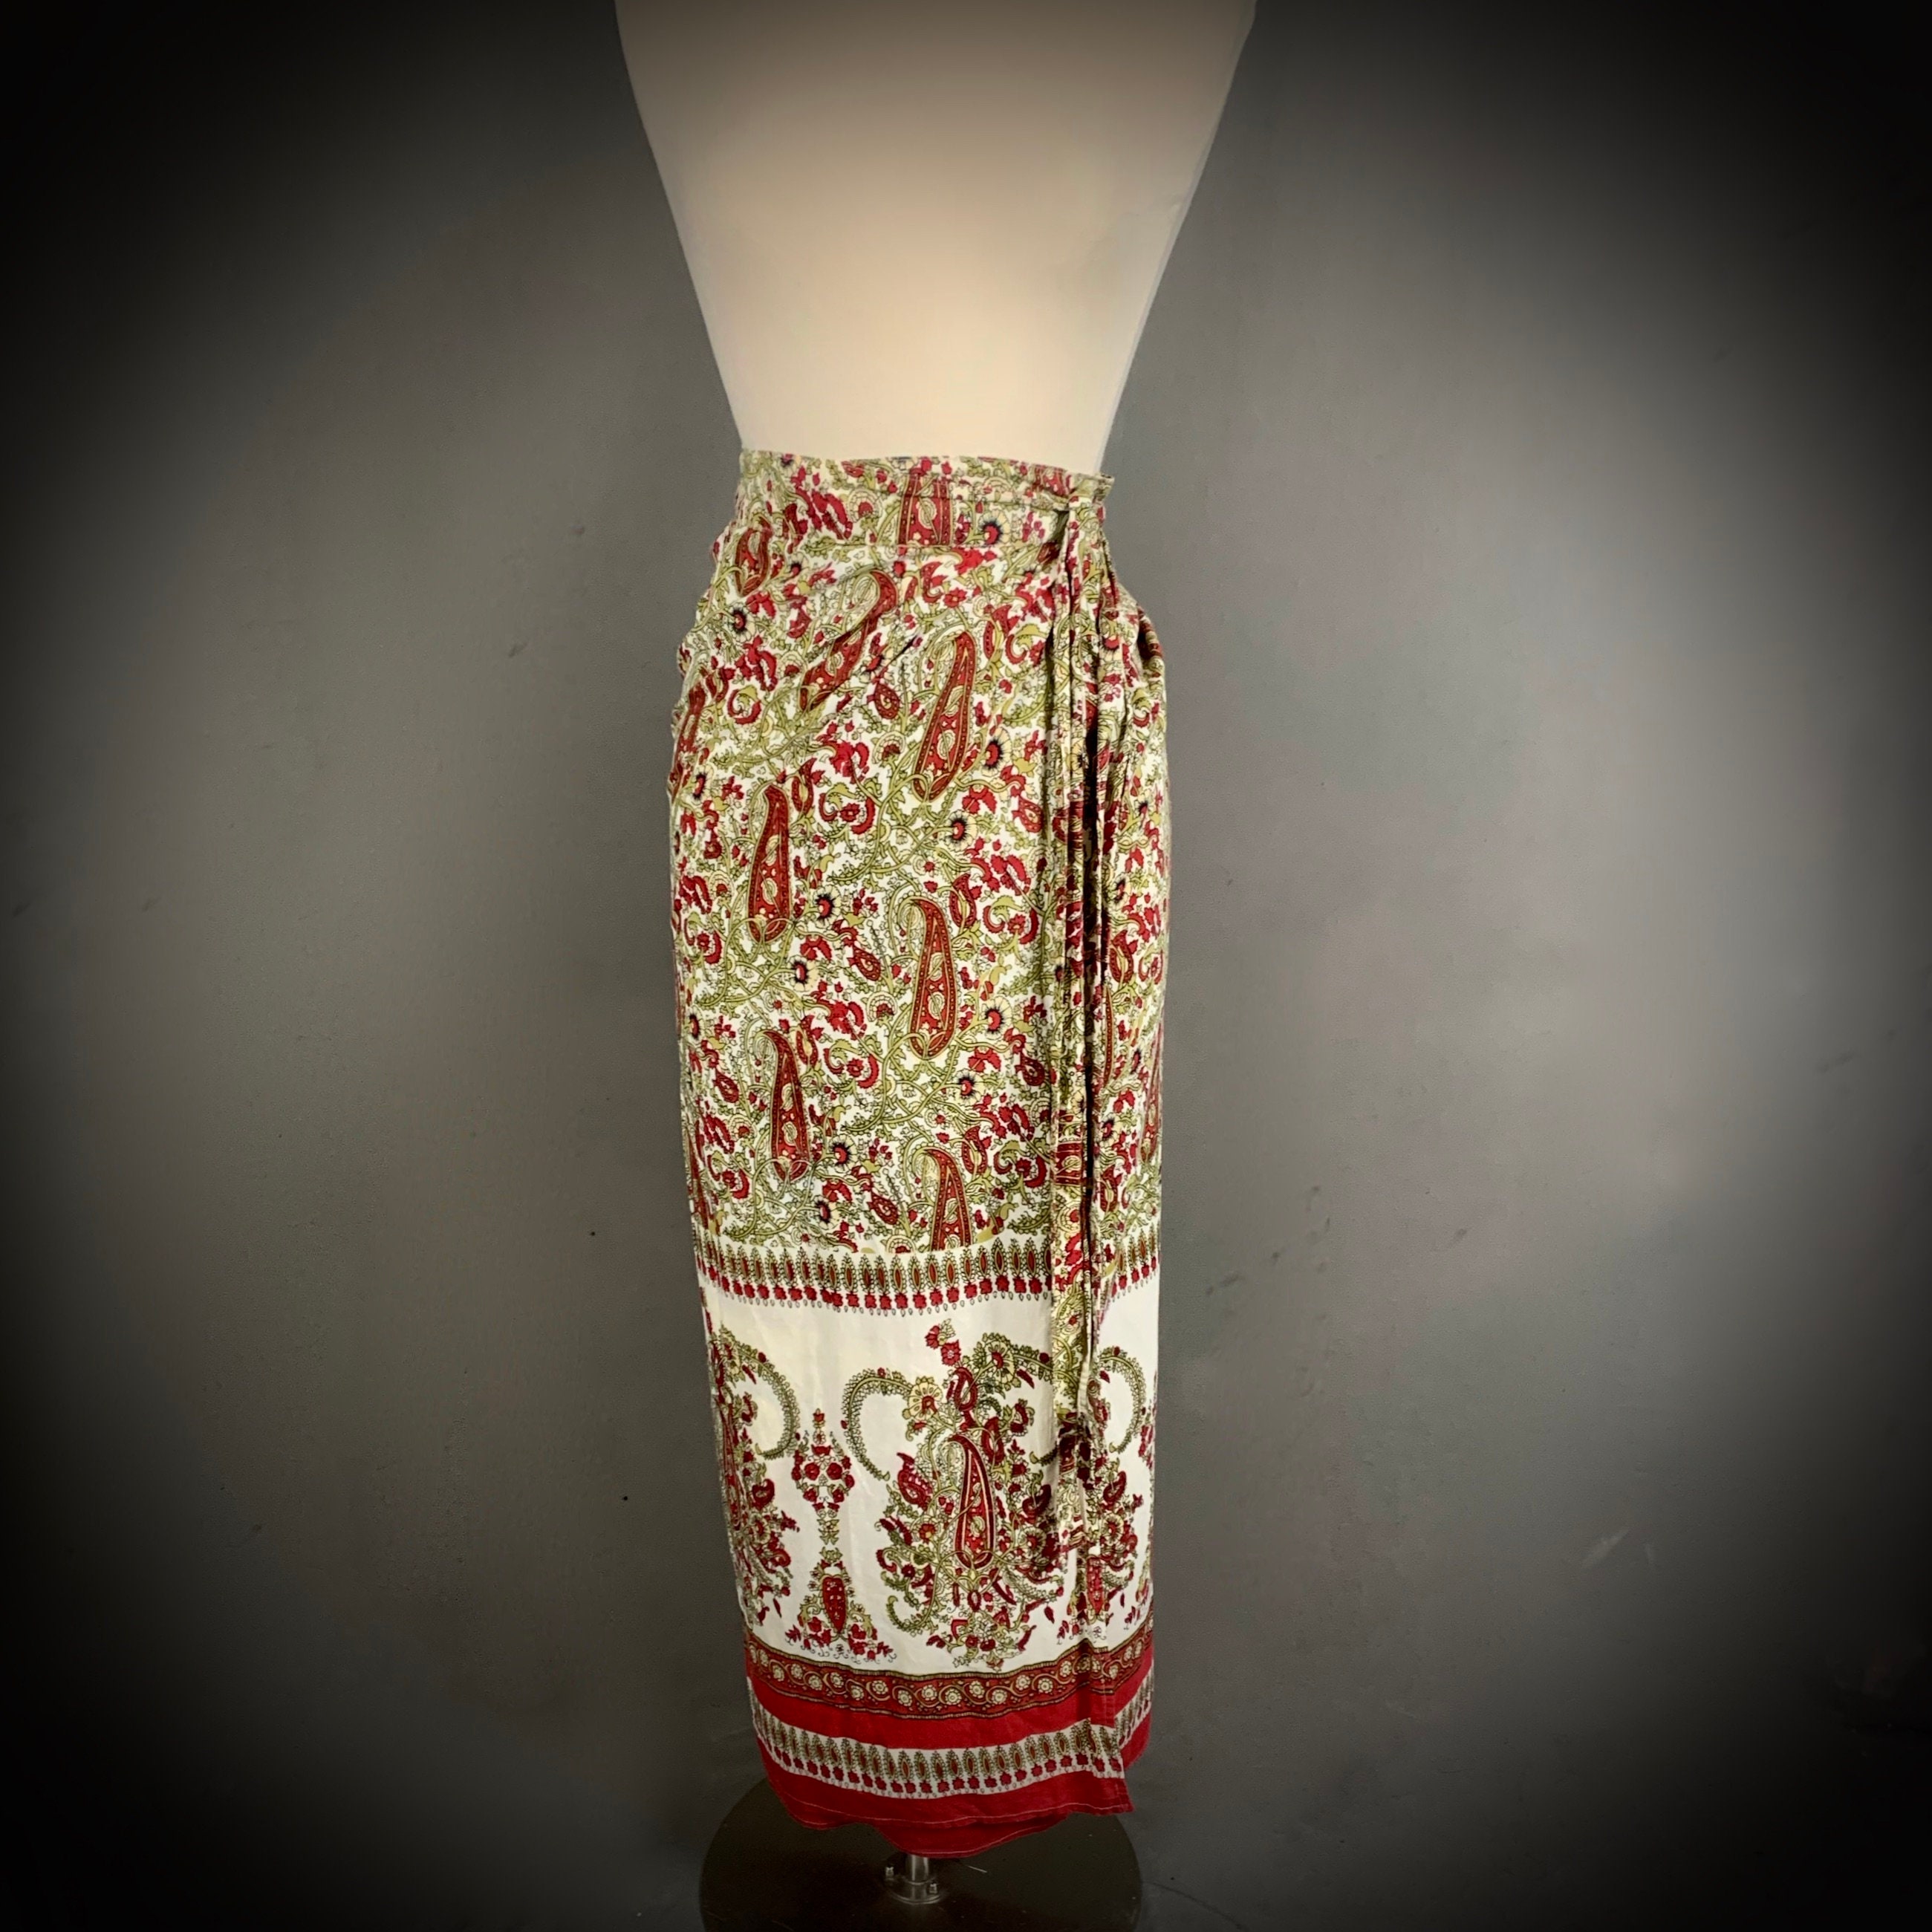 Vintage 70's Indian Cotton Wrap Skirt Maxi Skirt | Etsy